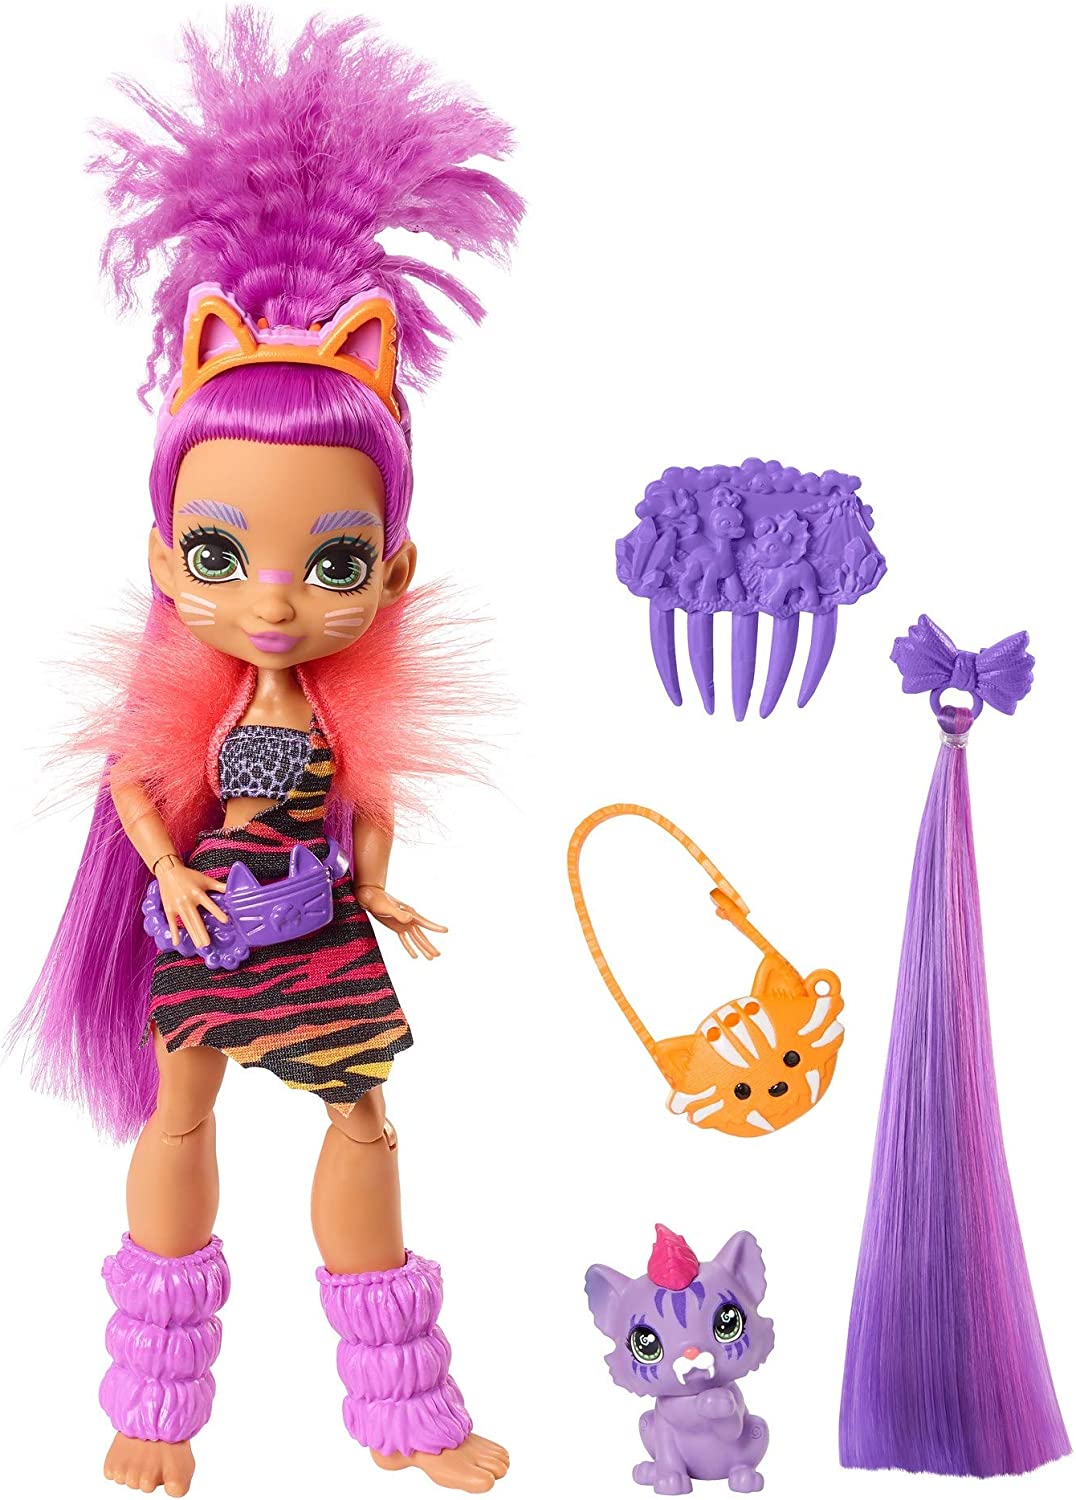 Mattel Cave Club Roaralai Prehistoric Fashion Doll w/ Dinosaur Pet & Accessories (purple hair) $5 + Free Shipping w/ Prime or on orders $25+